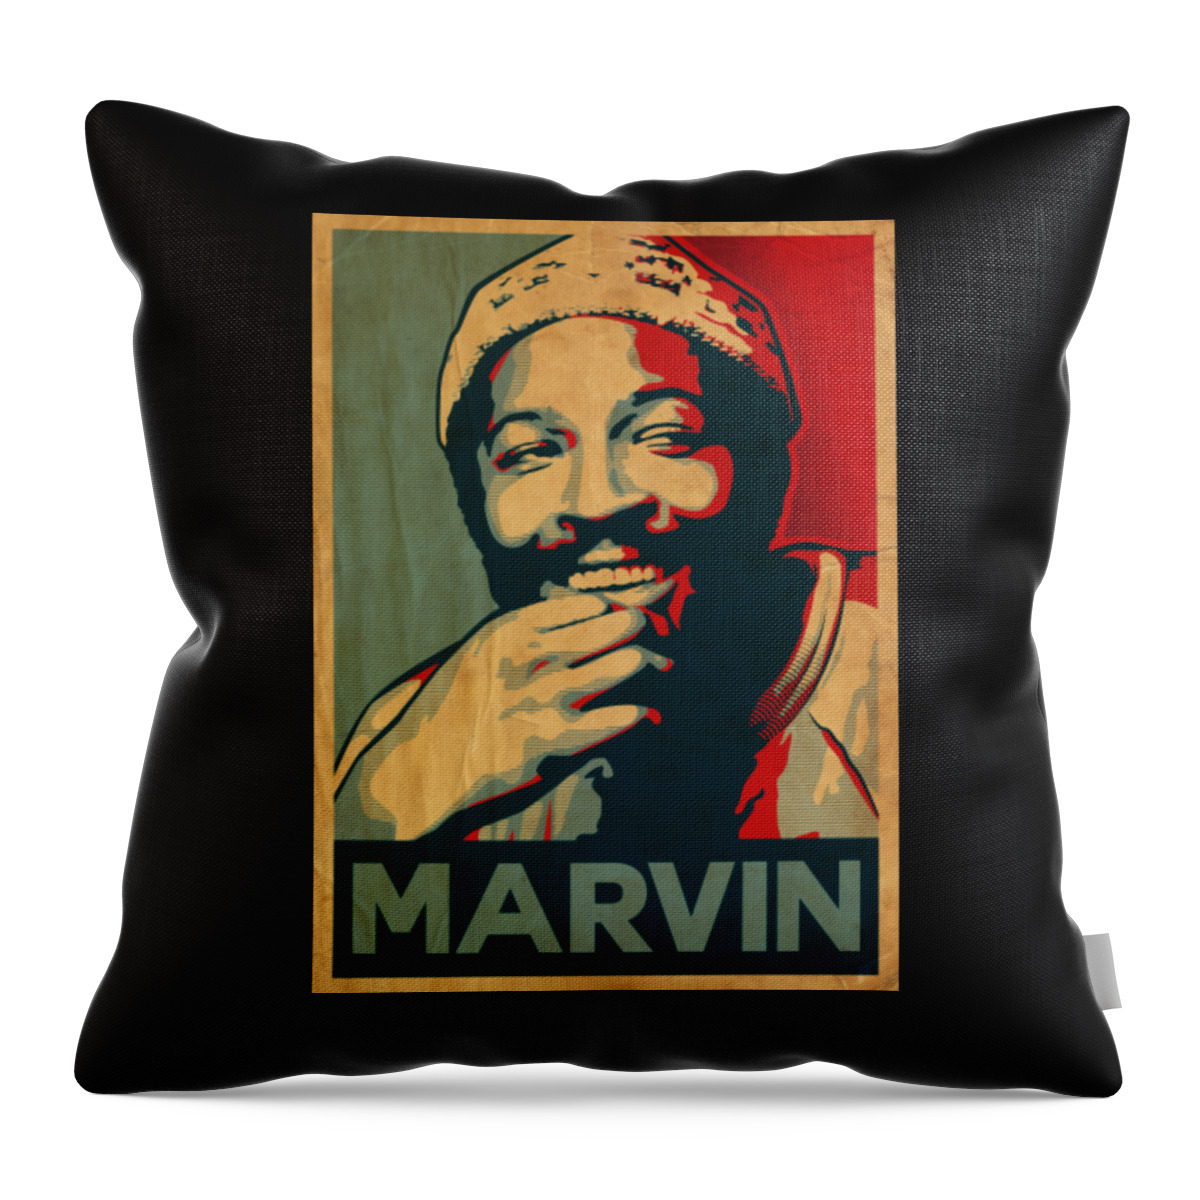 Marvin Gaye Throw Pillow featuring the digital art Marvin Gaye Pop Art by Notorious Artist